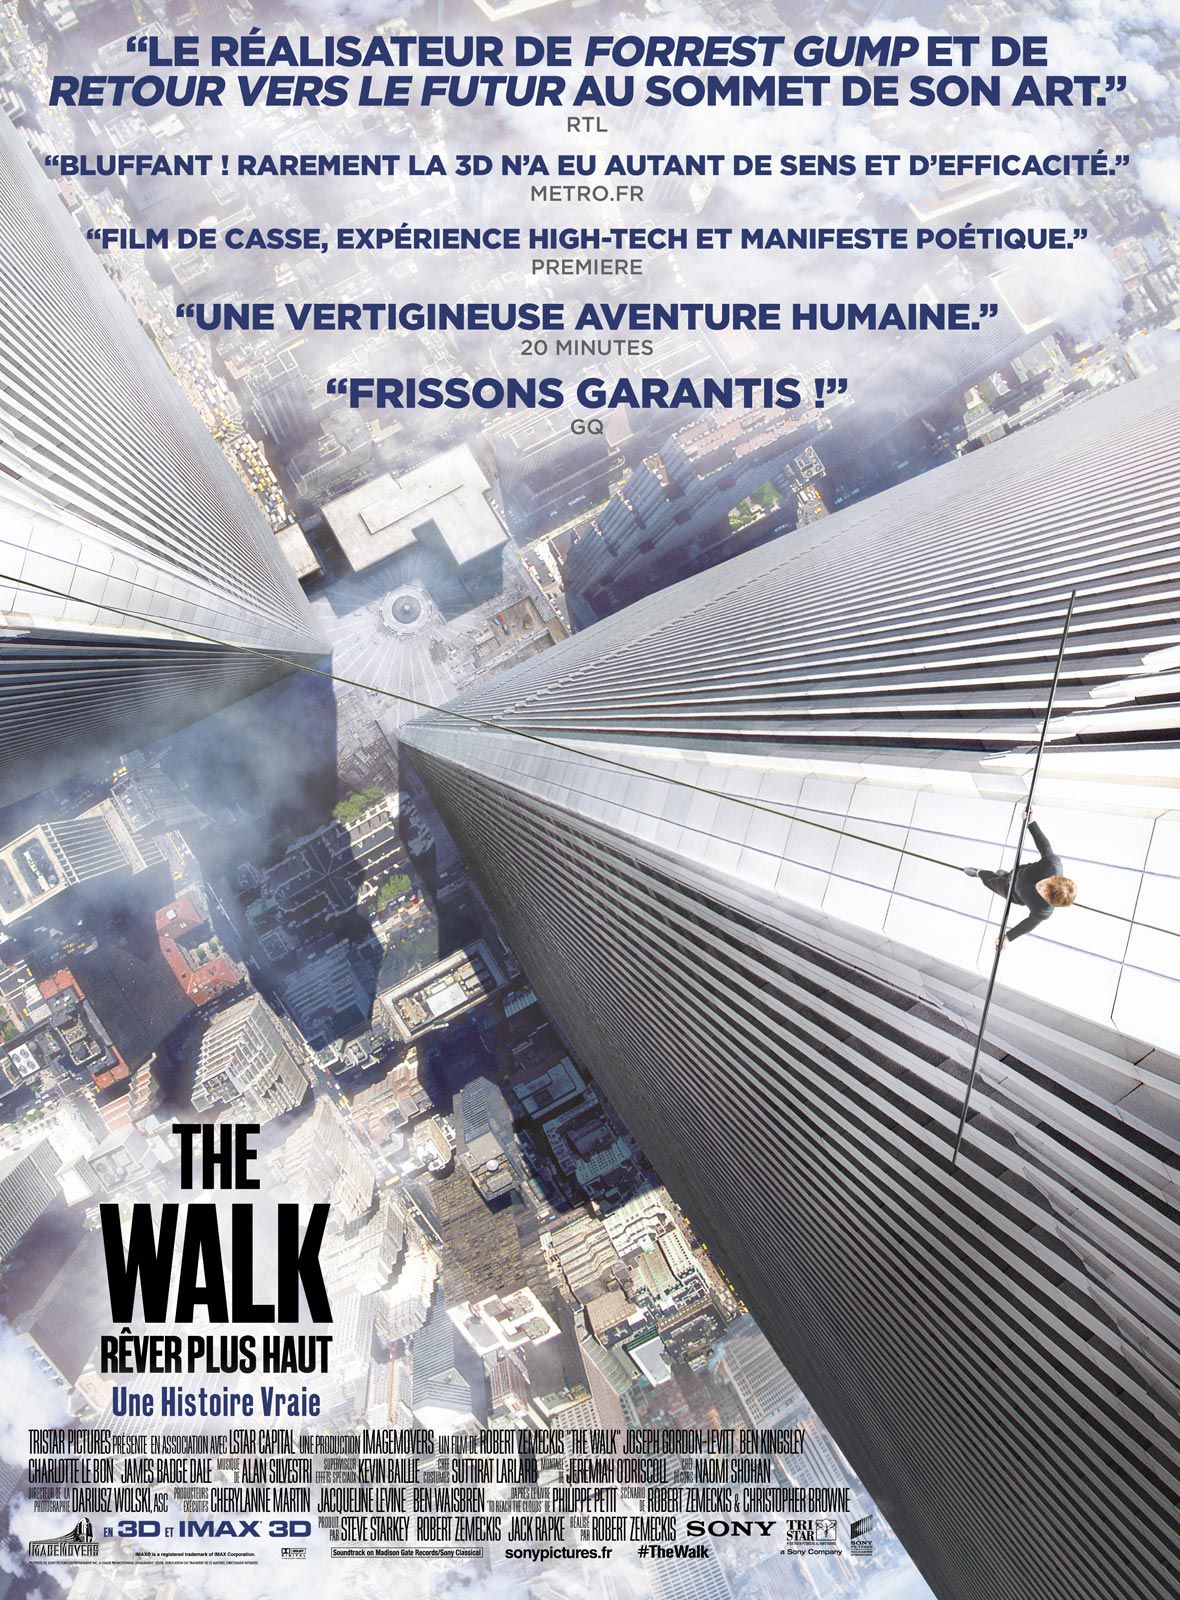 The Walk - Rêver plus haut - Film (2015) streaming VF gratuit complet